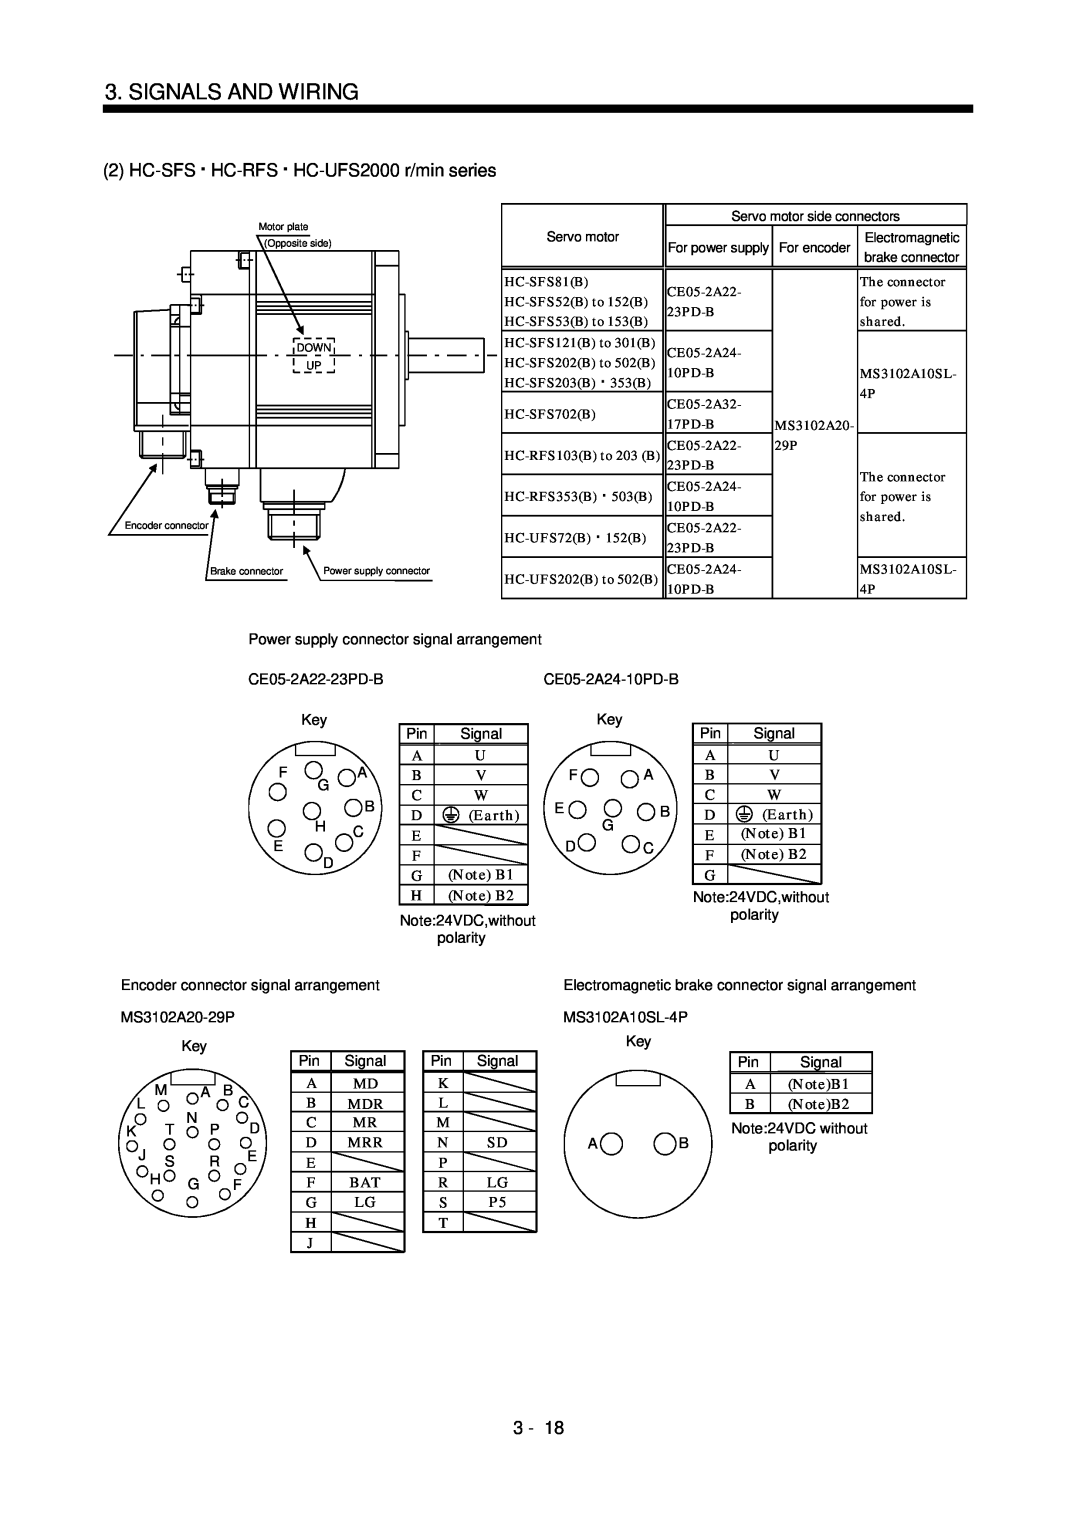 Bose MR-J2S- B instruction manual HC-SFS HC-RFS HC-UFS2000r/min series, Signals And Wiring 